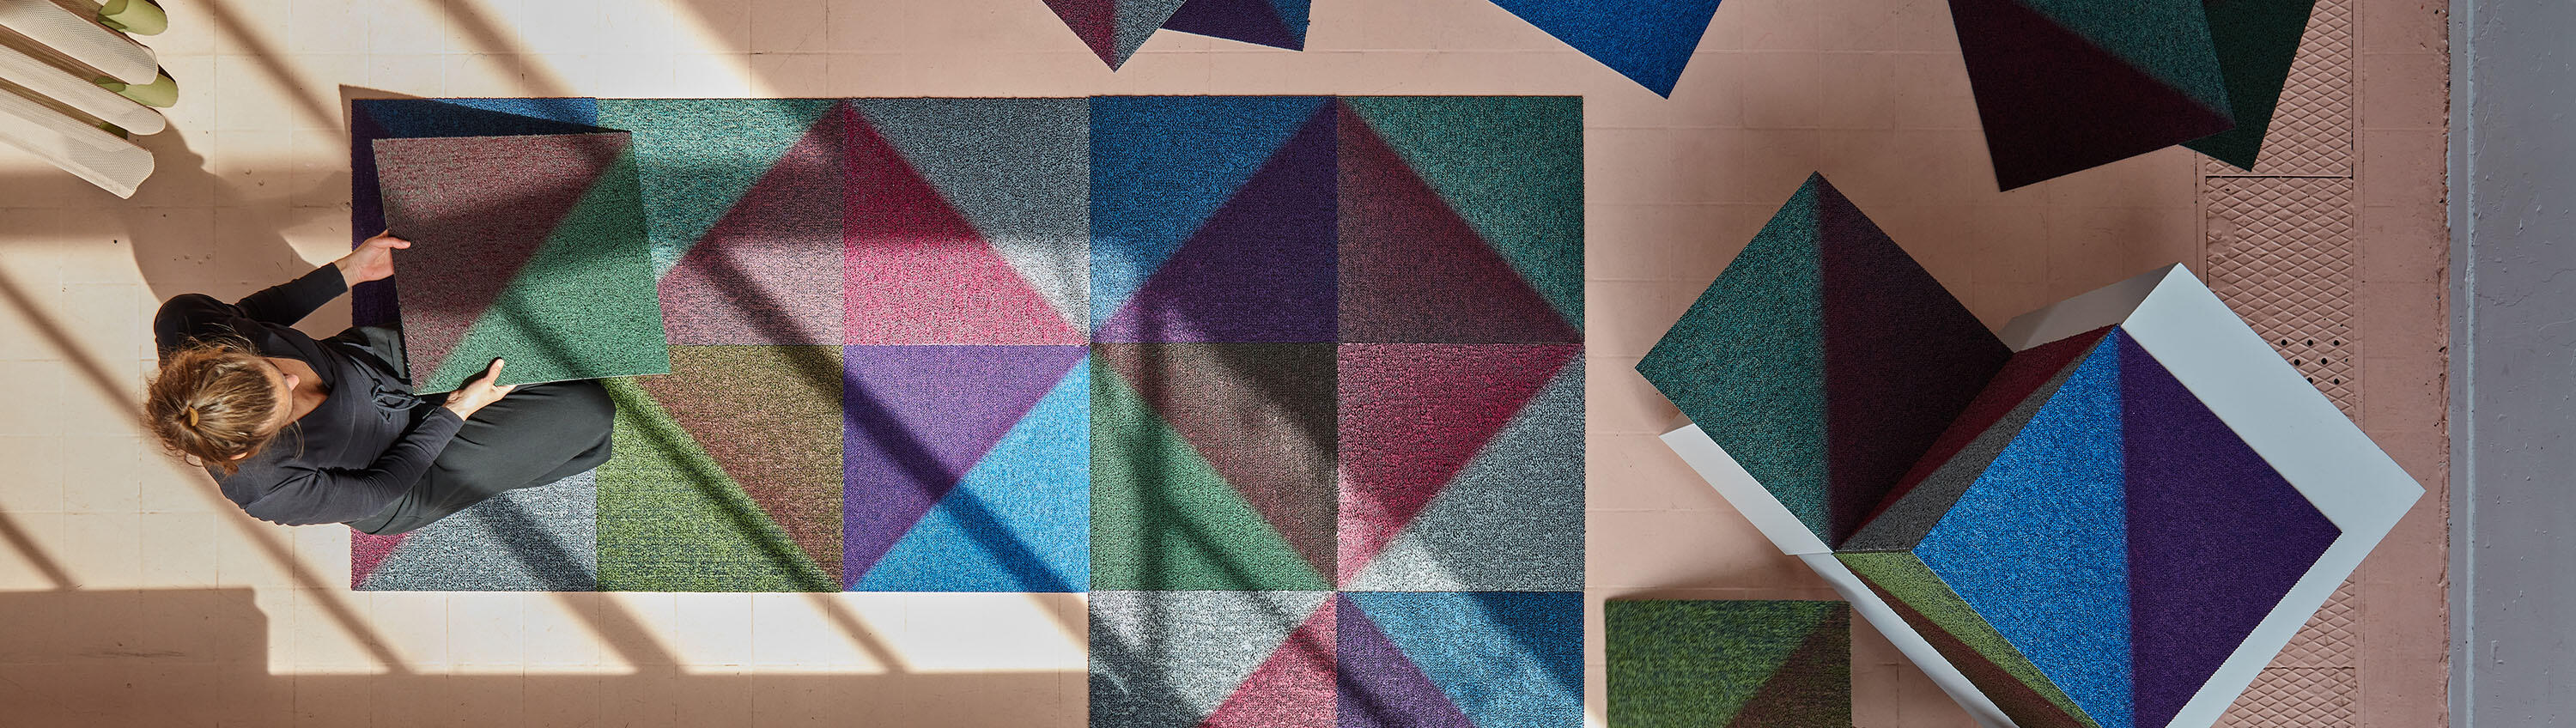 Tarkett and Studio RENS present recolored textile tiles during 3daysofdesign 